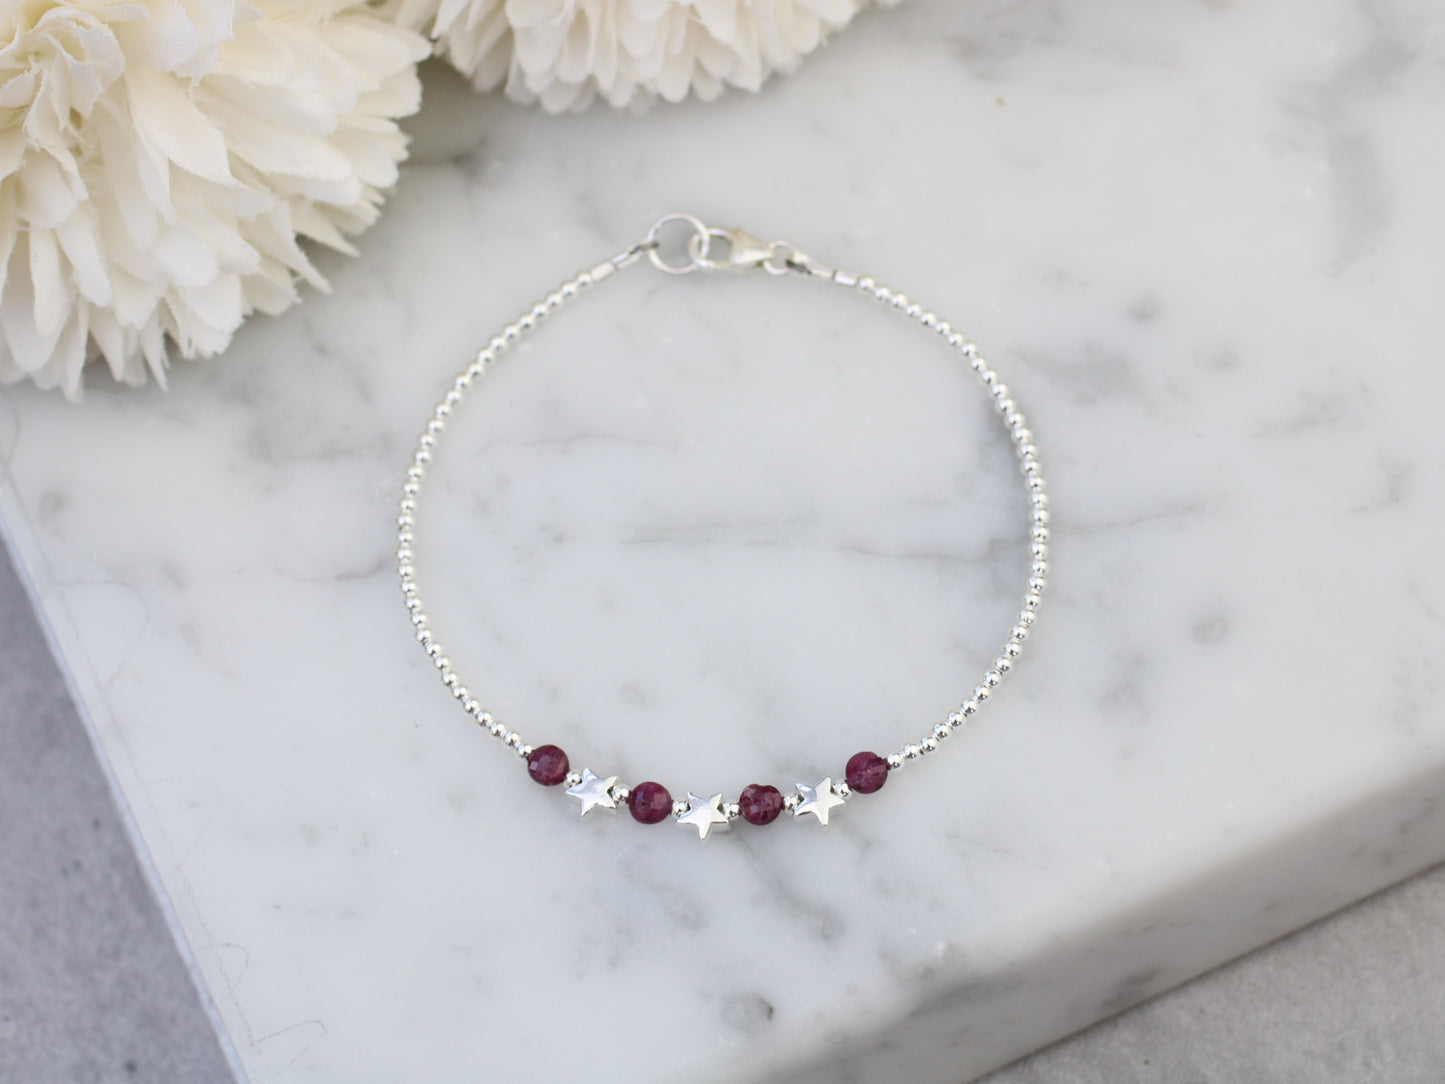 Star bracelet with ruby gemstones. July birthstone.